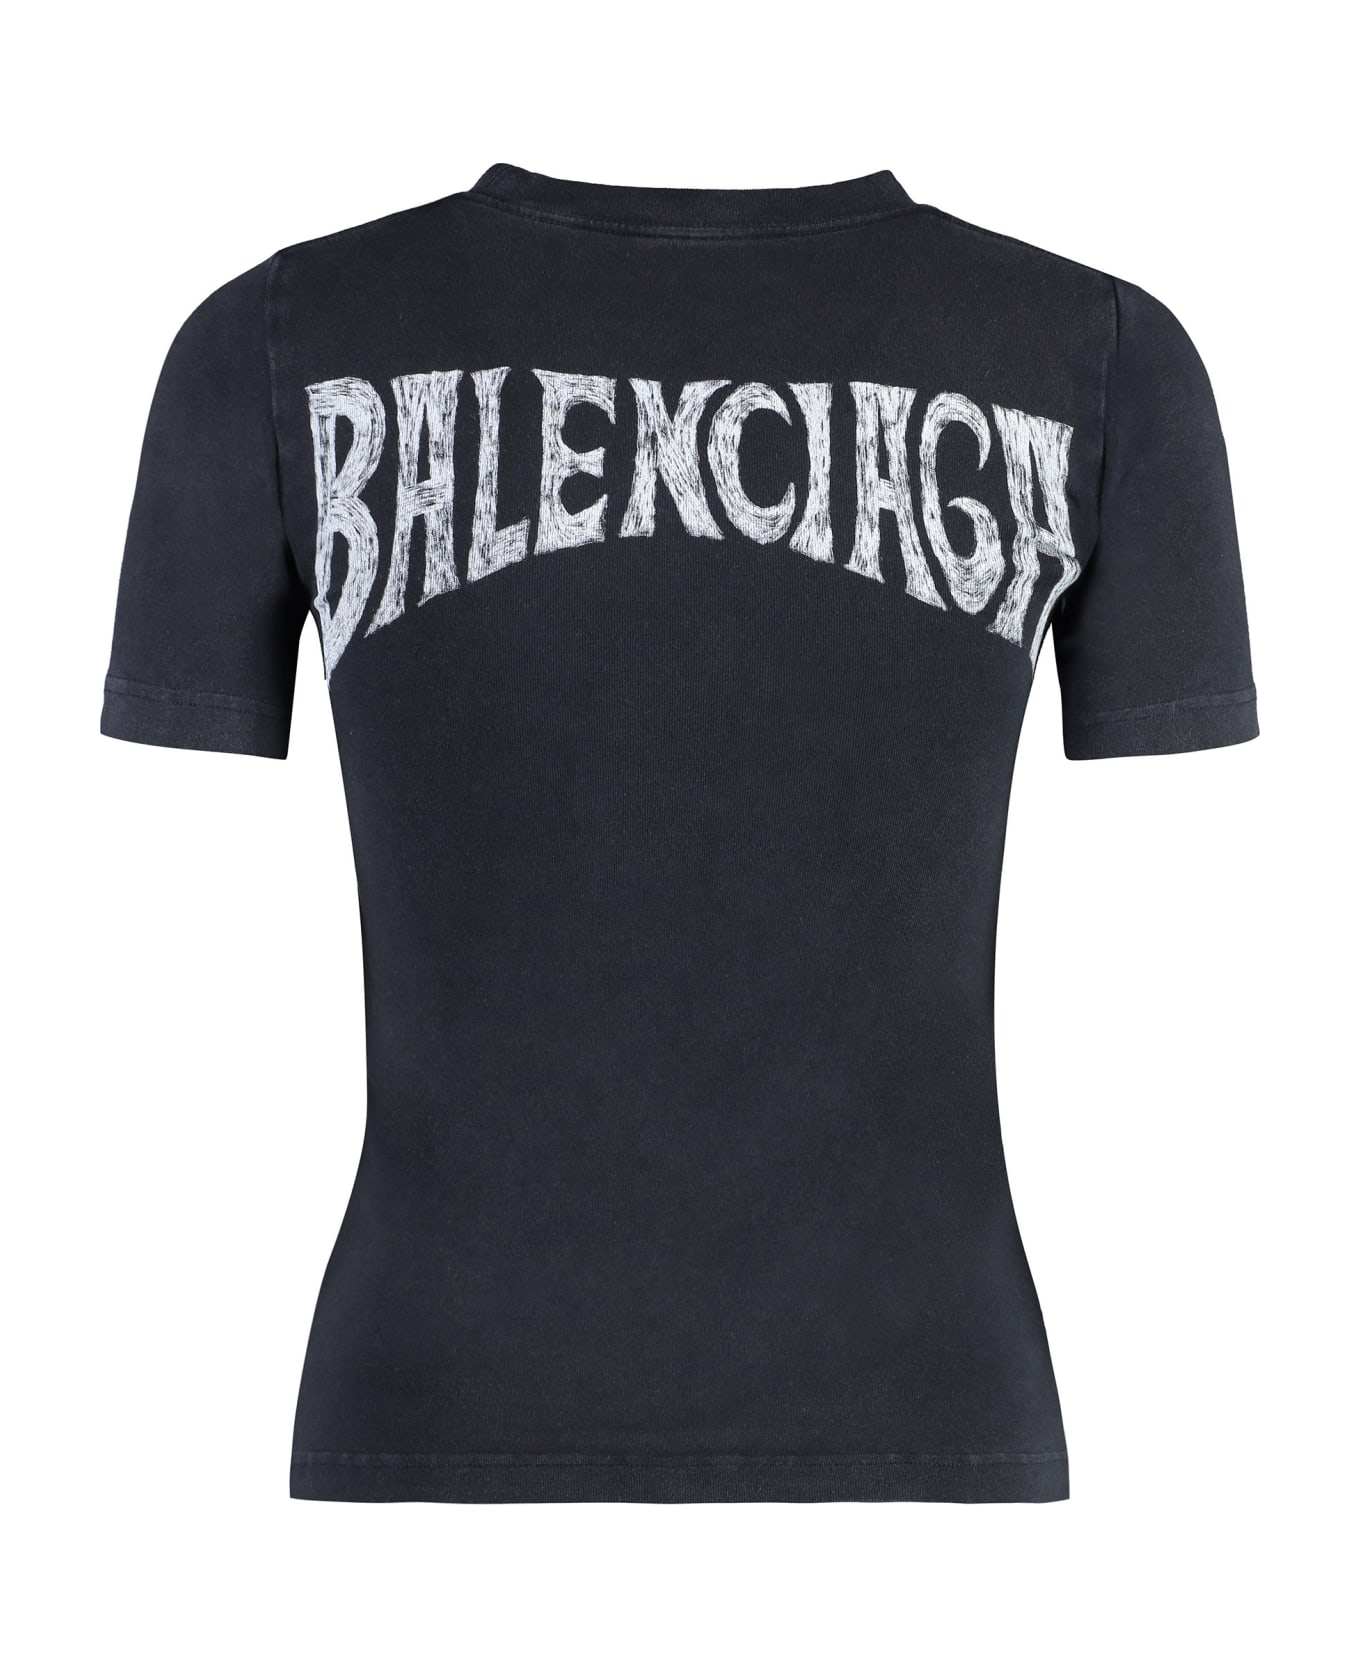 Balenciaga Printed Cotton T-shirt - black Tシャツ